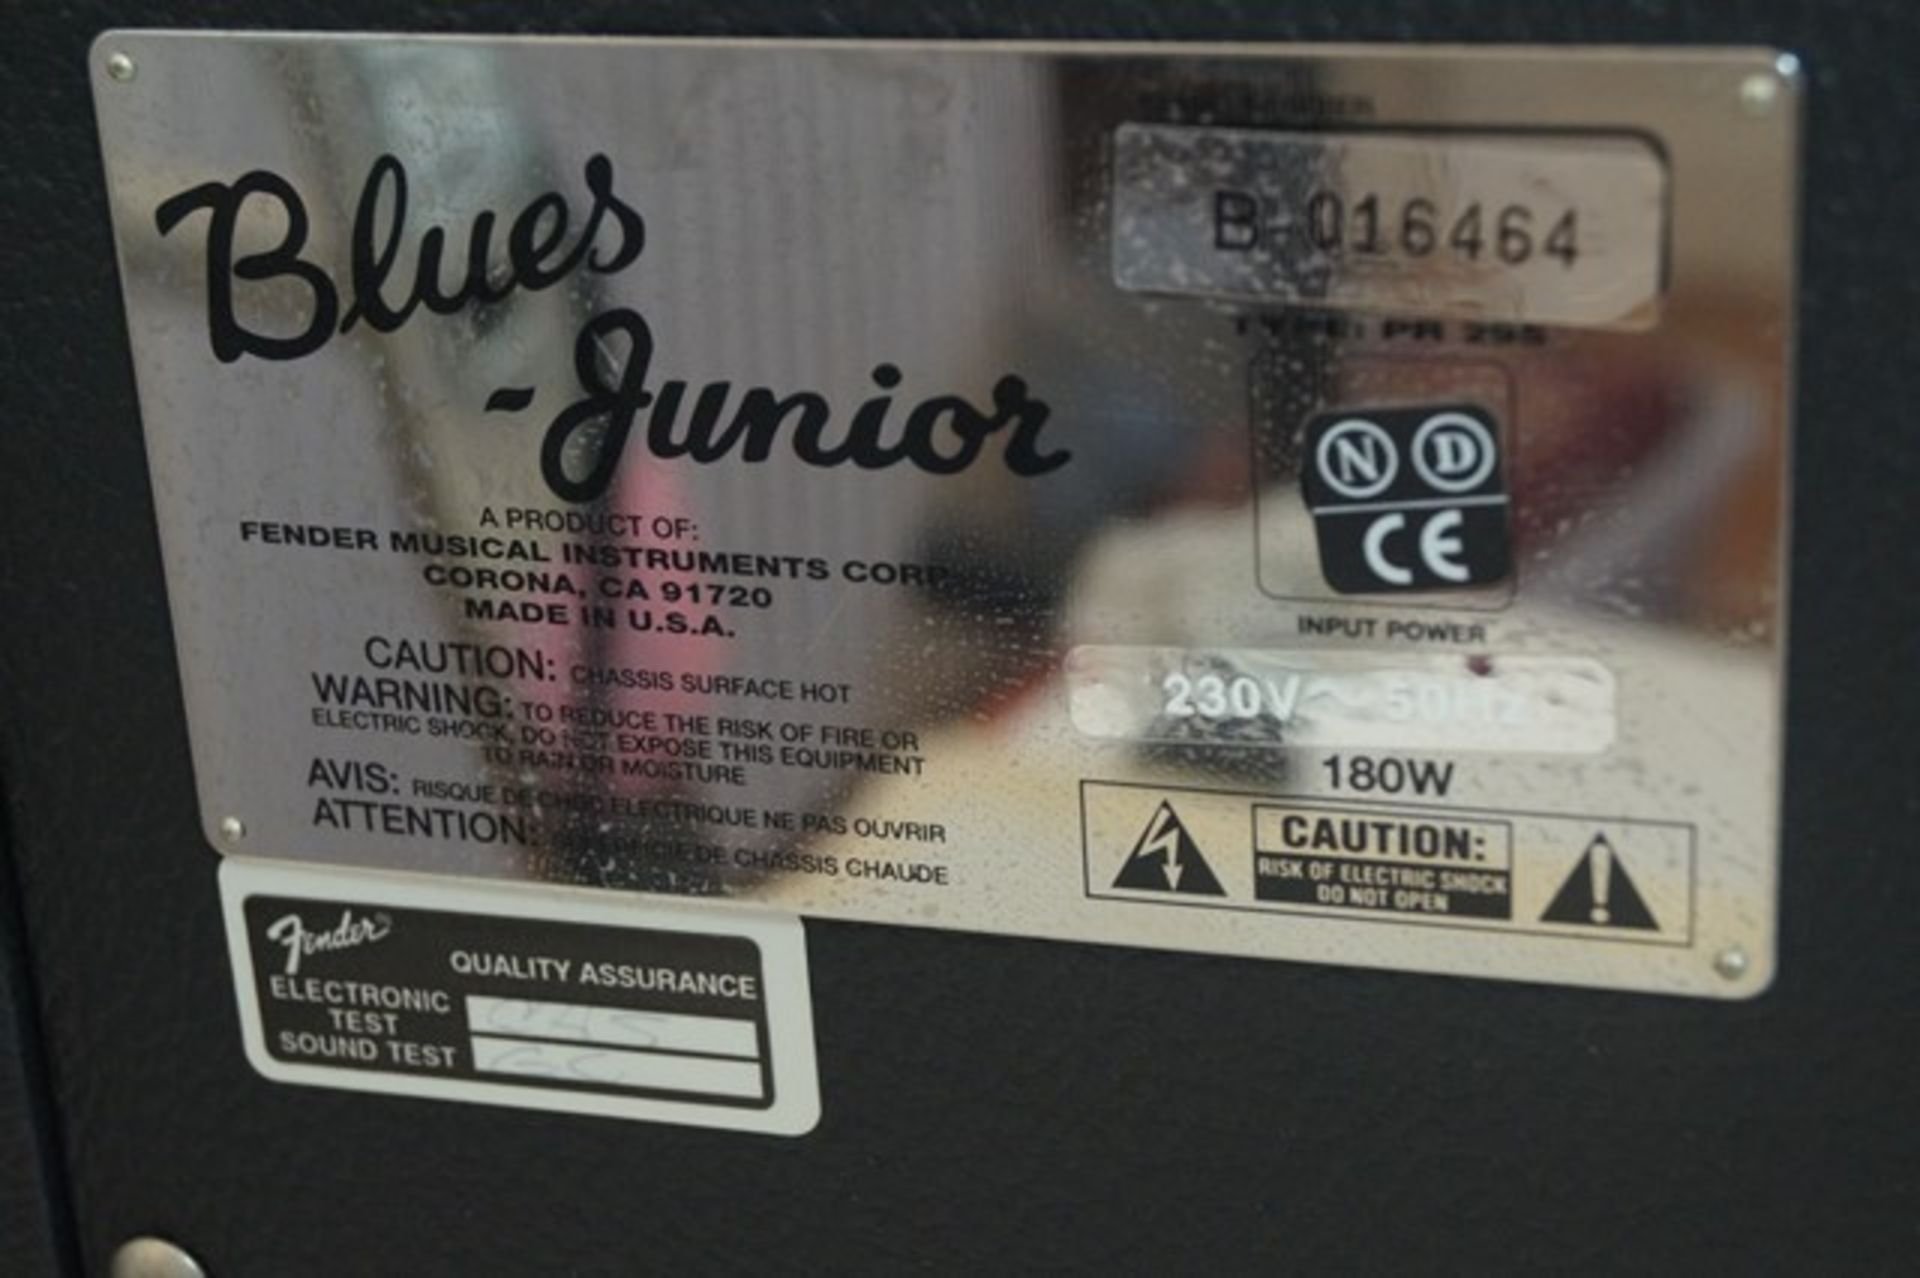 1x Gitarrenverstärker "Fender-Blues Junior" + Kabel; Fender Musical Instrument Corp., Made in U.S.A - Bild 3 aus 5